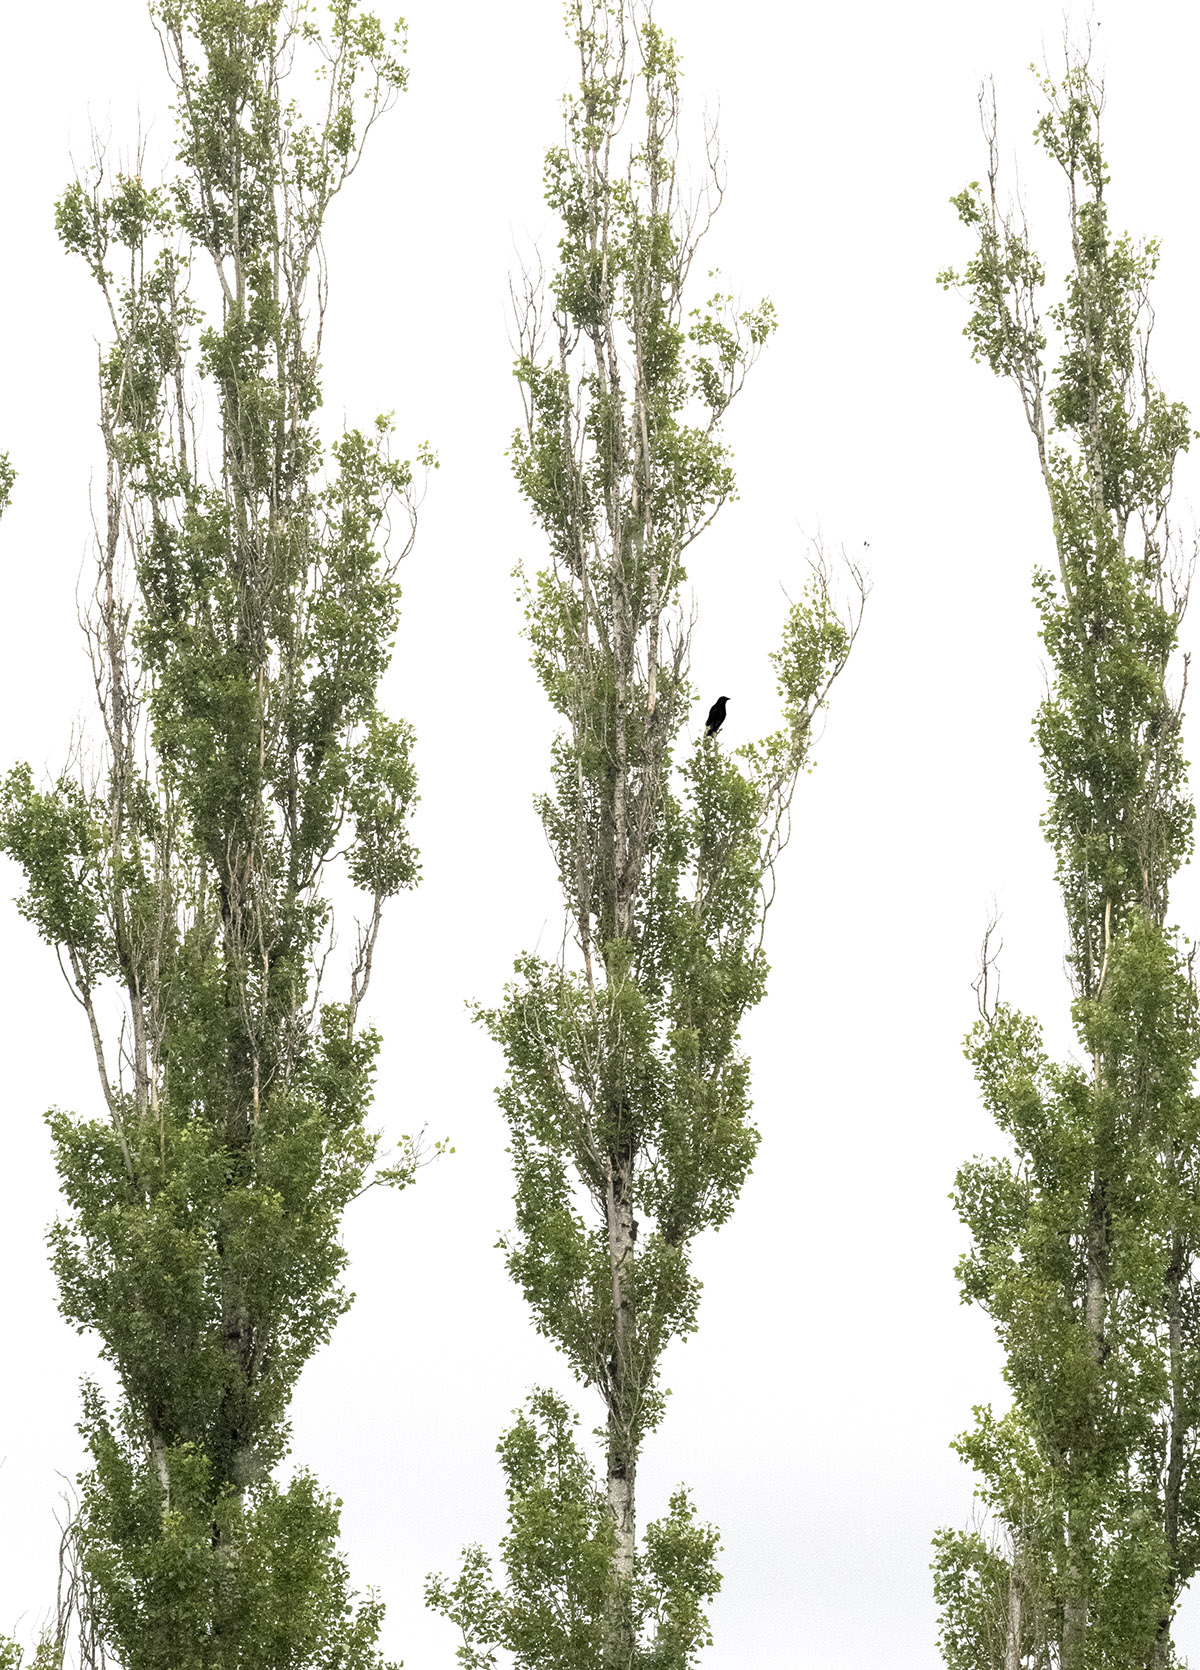 Crow in the poplars